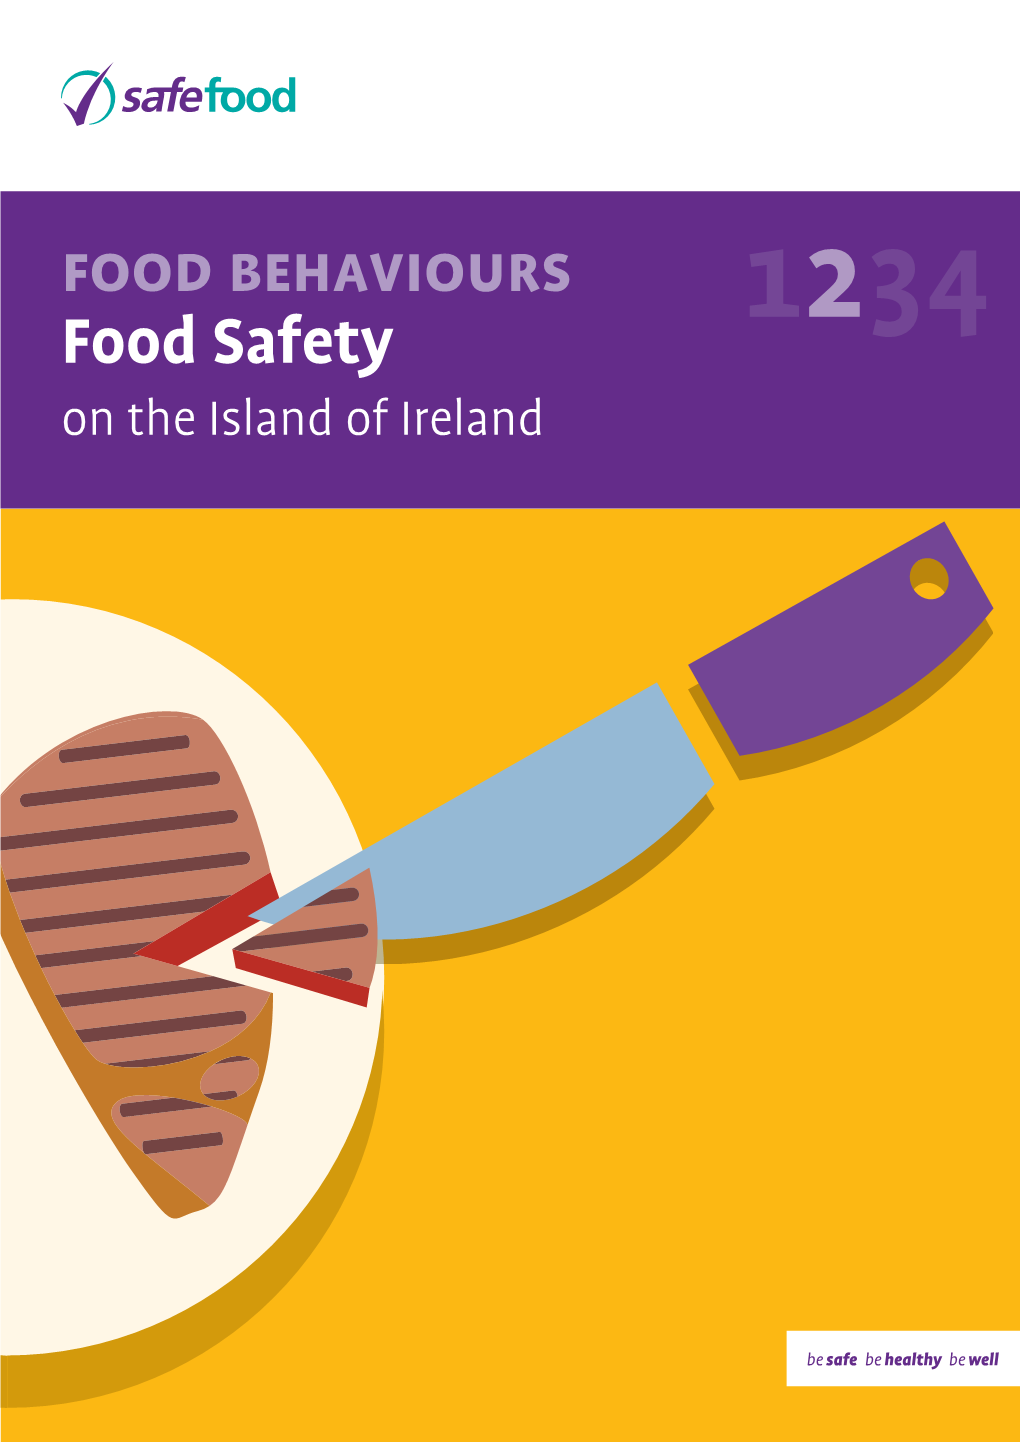 Volume 1: Food Safety on the Island of Ireland (PDF, 1.5MB)